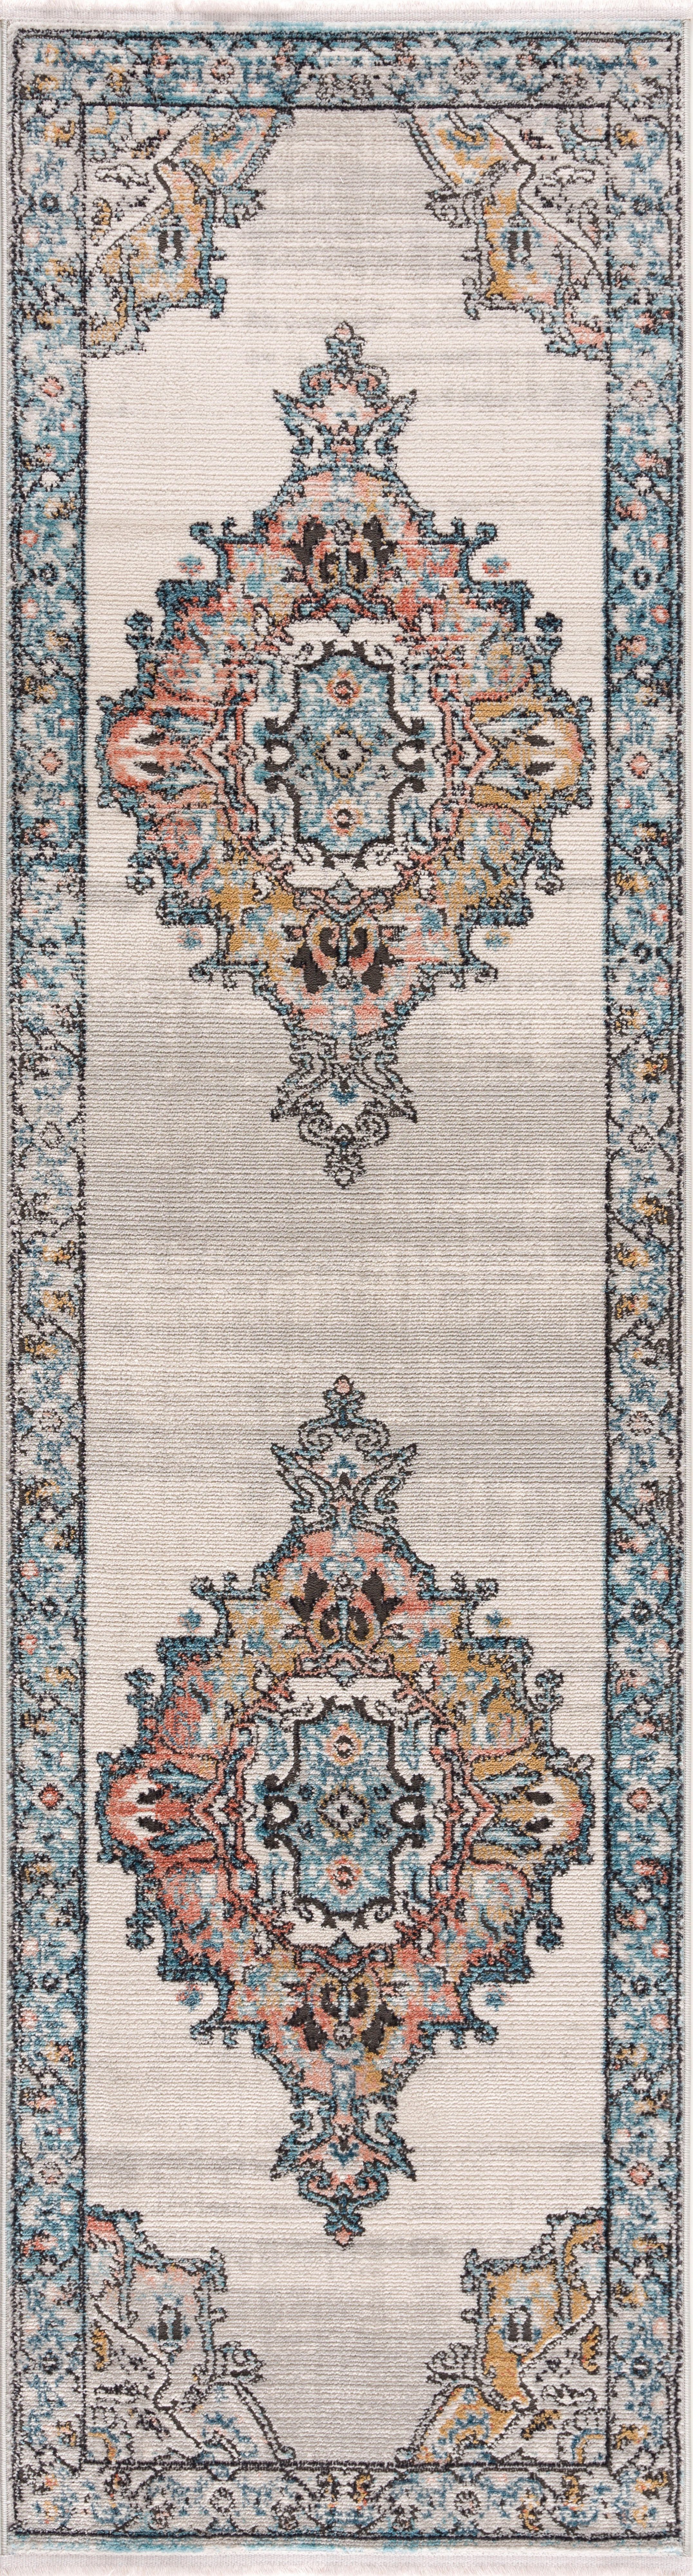 Läufer Novel 8640, Carpet City, rechteckig, Höhe: 11 mm, Vintage-Teppich  mit Fransen, Used-Look, Weich, Multicolor